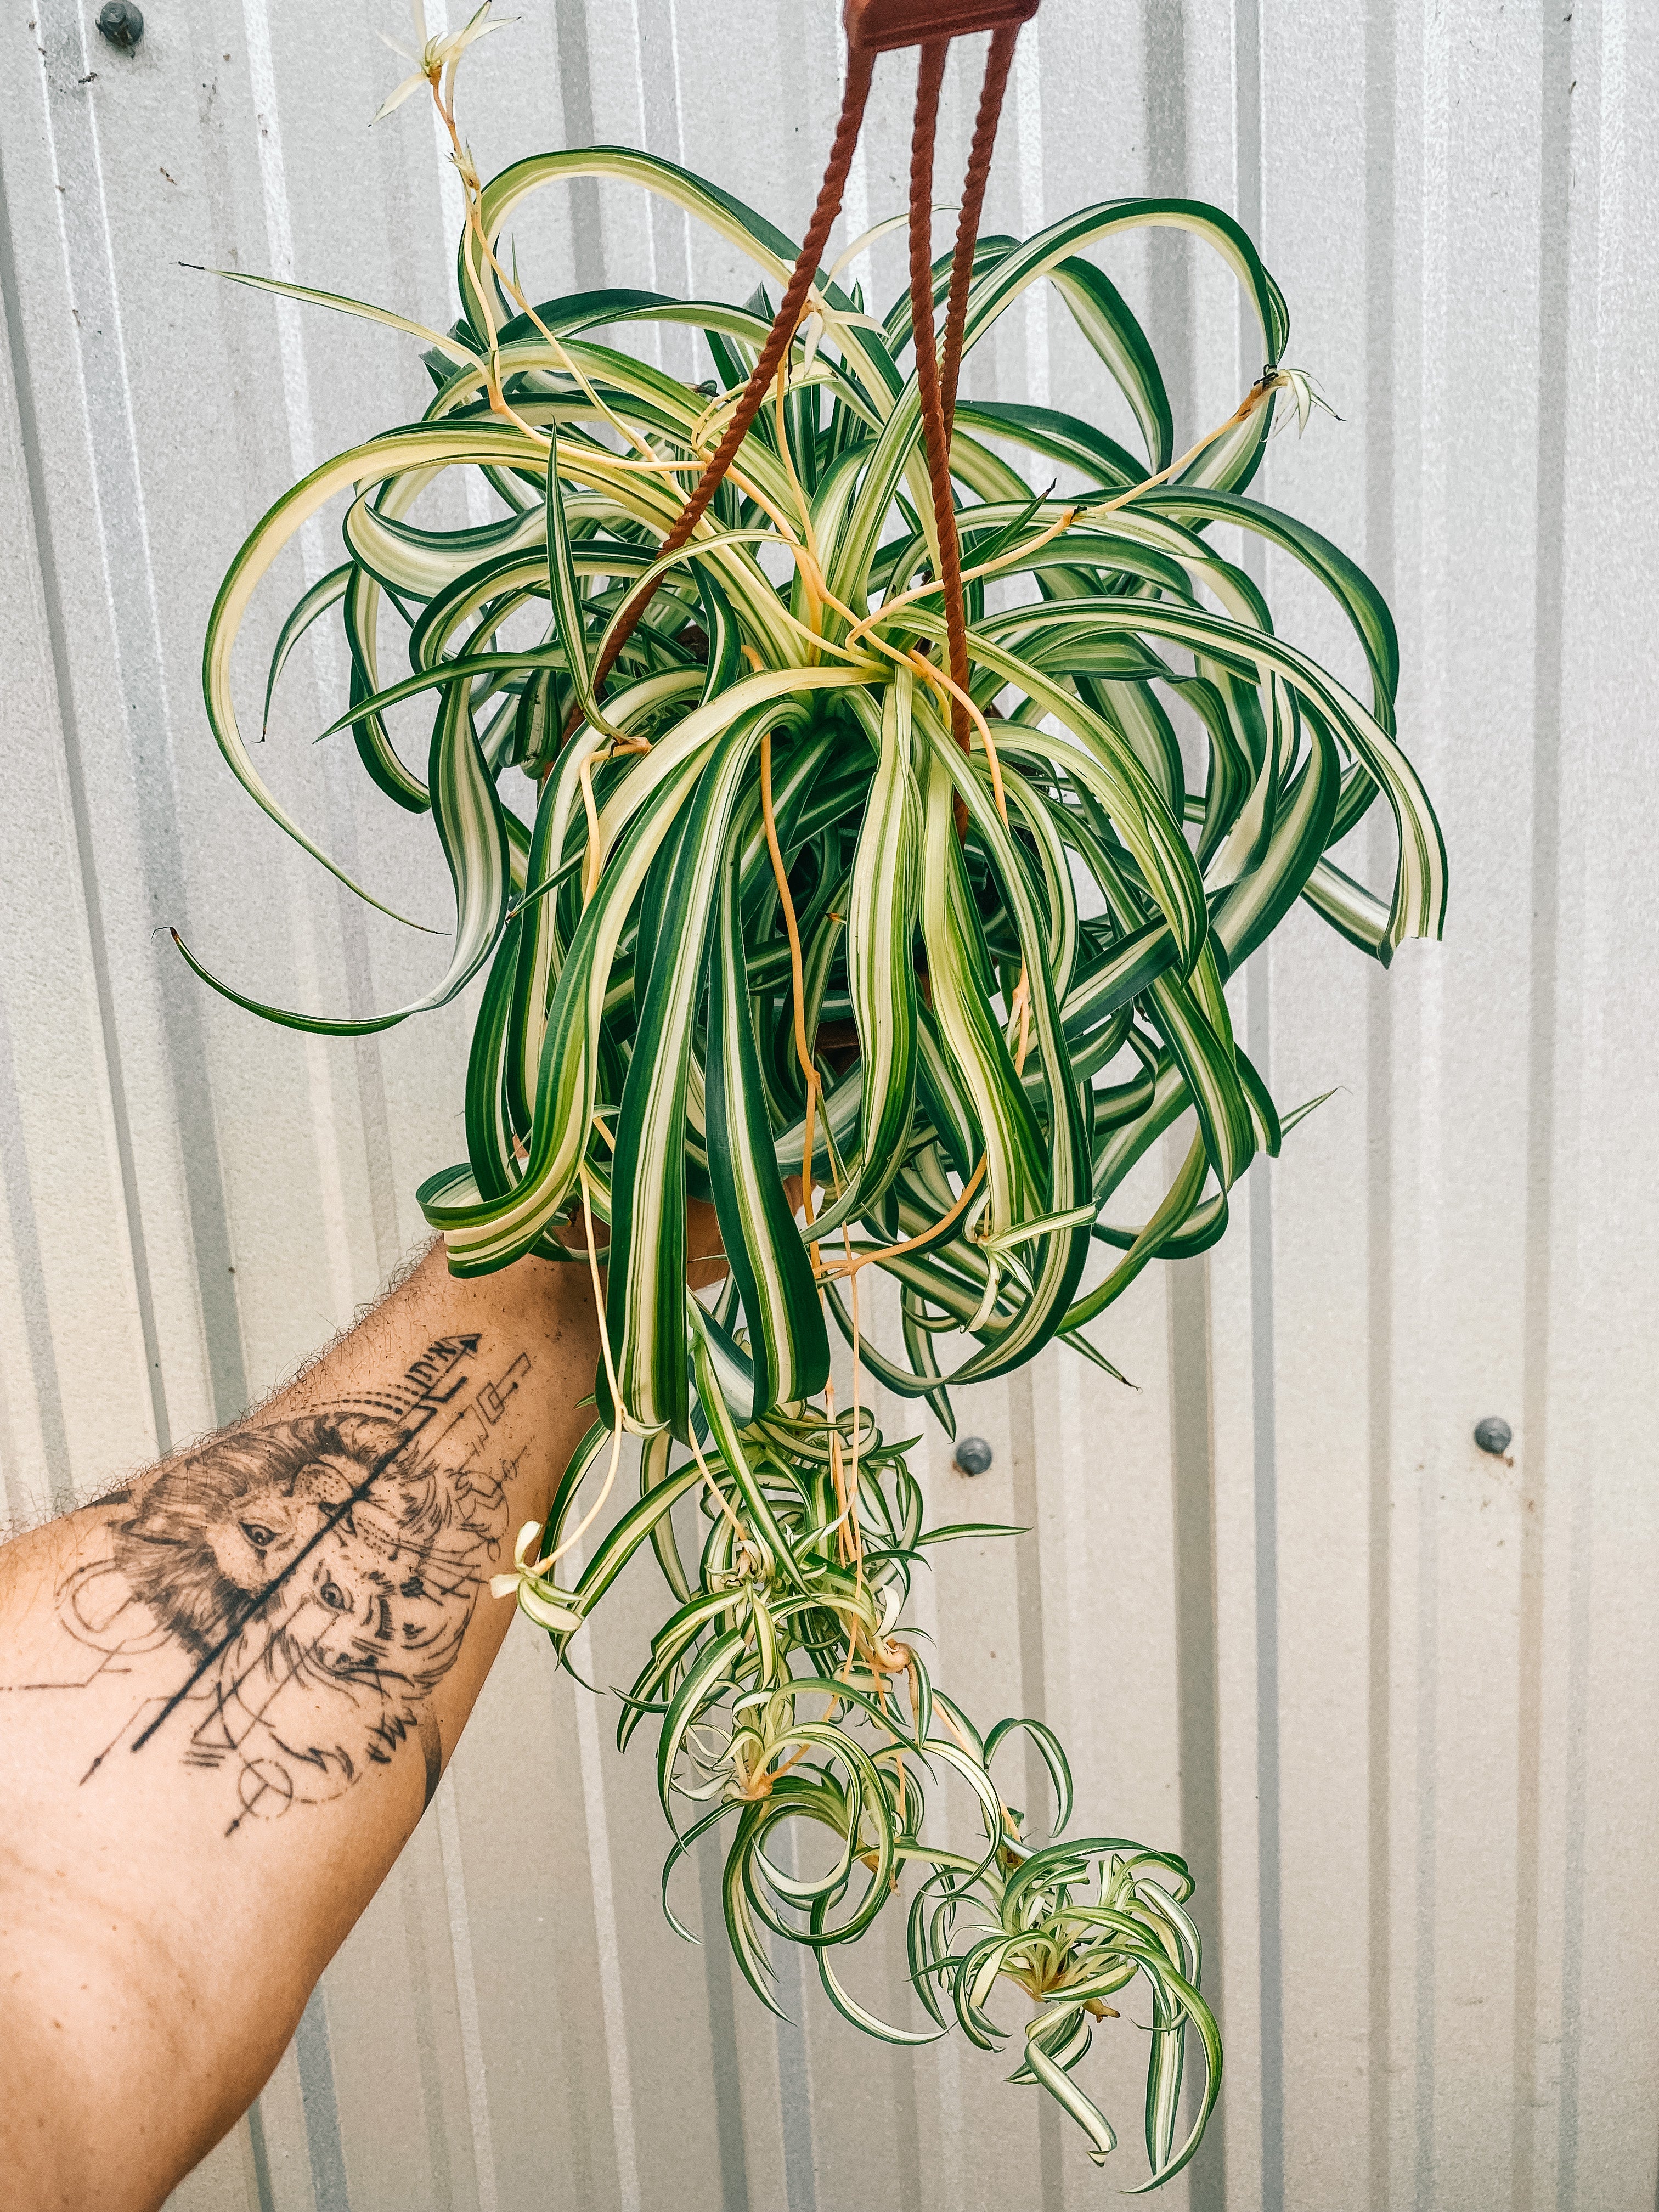 Spider Plants – Beyond Behnkes